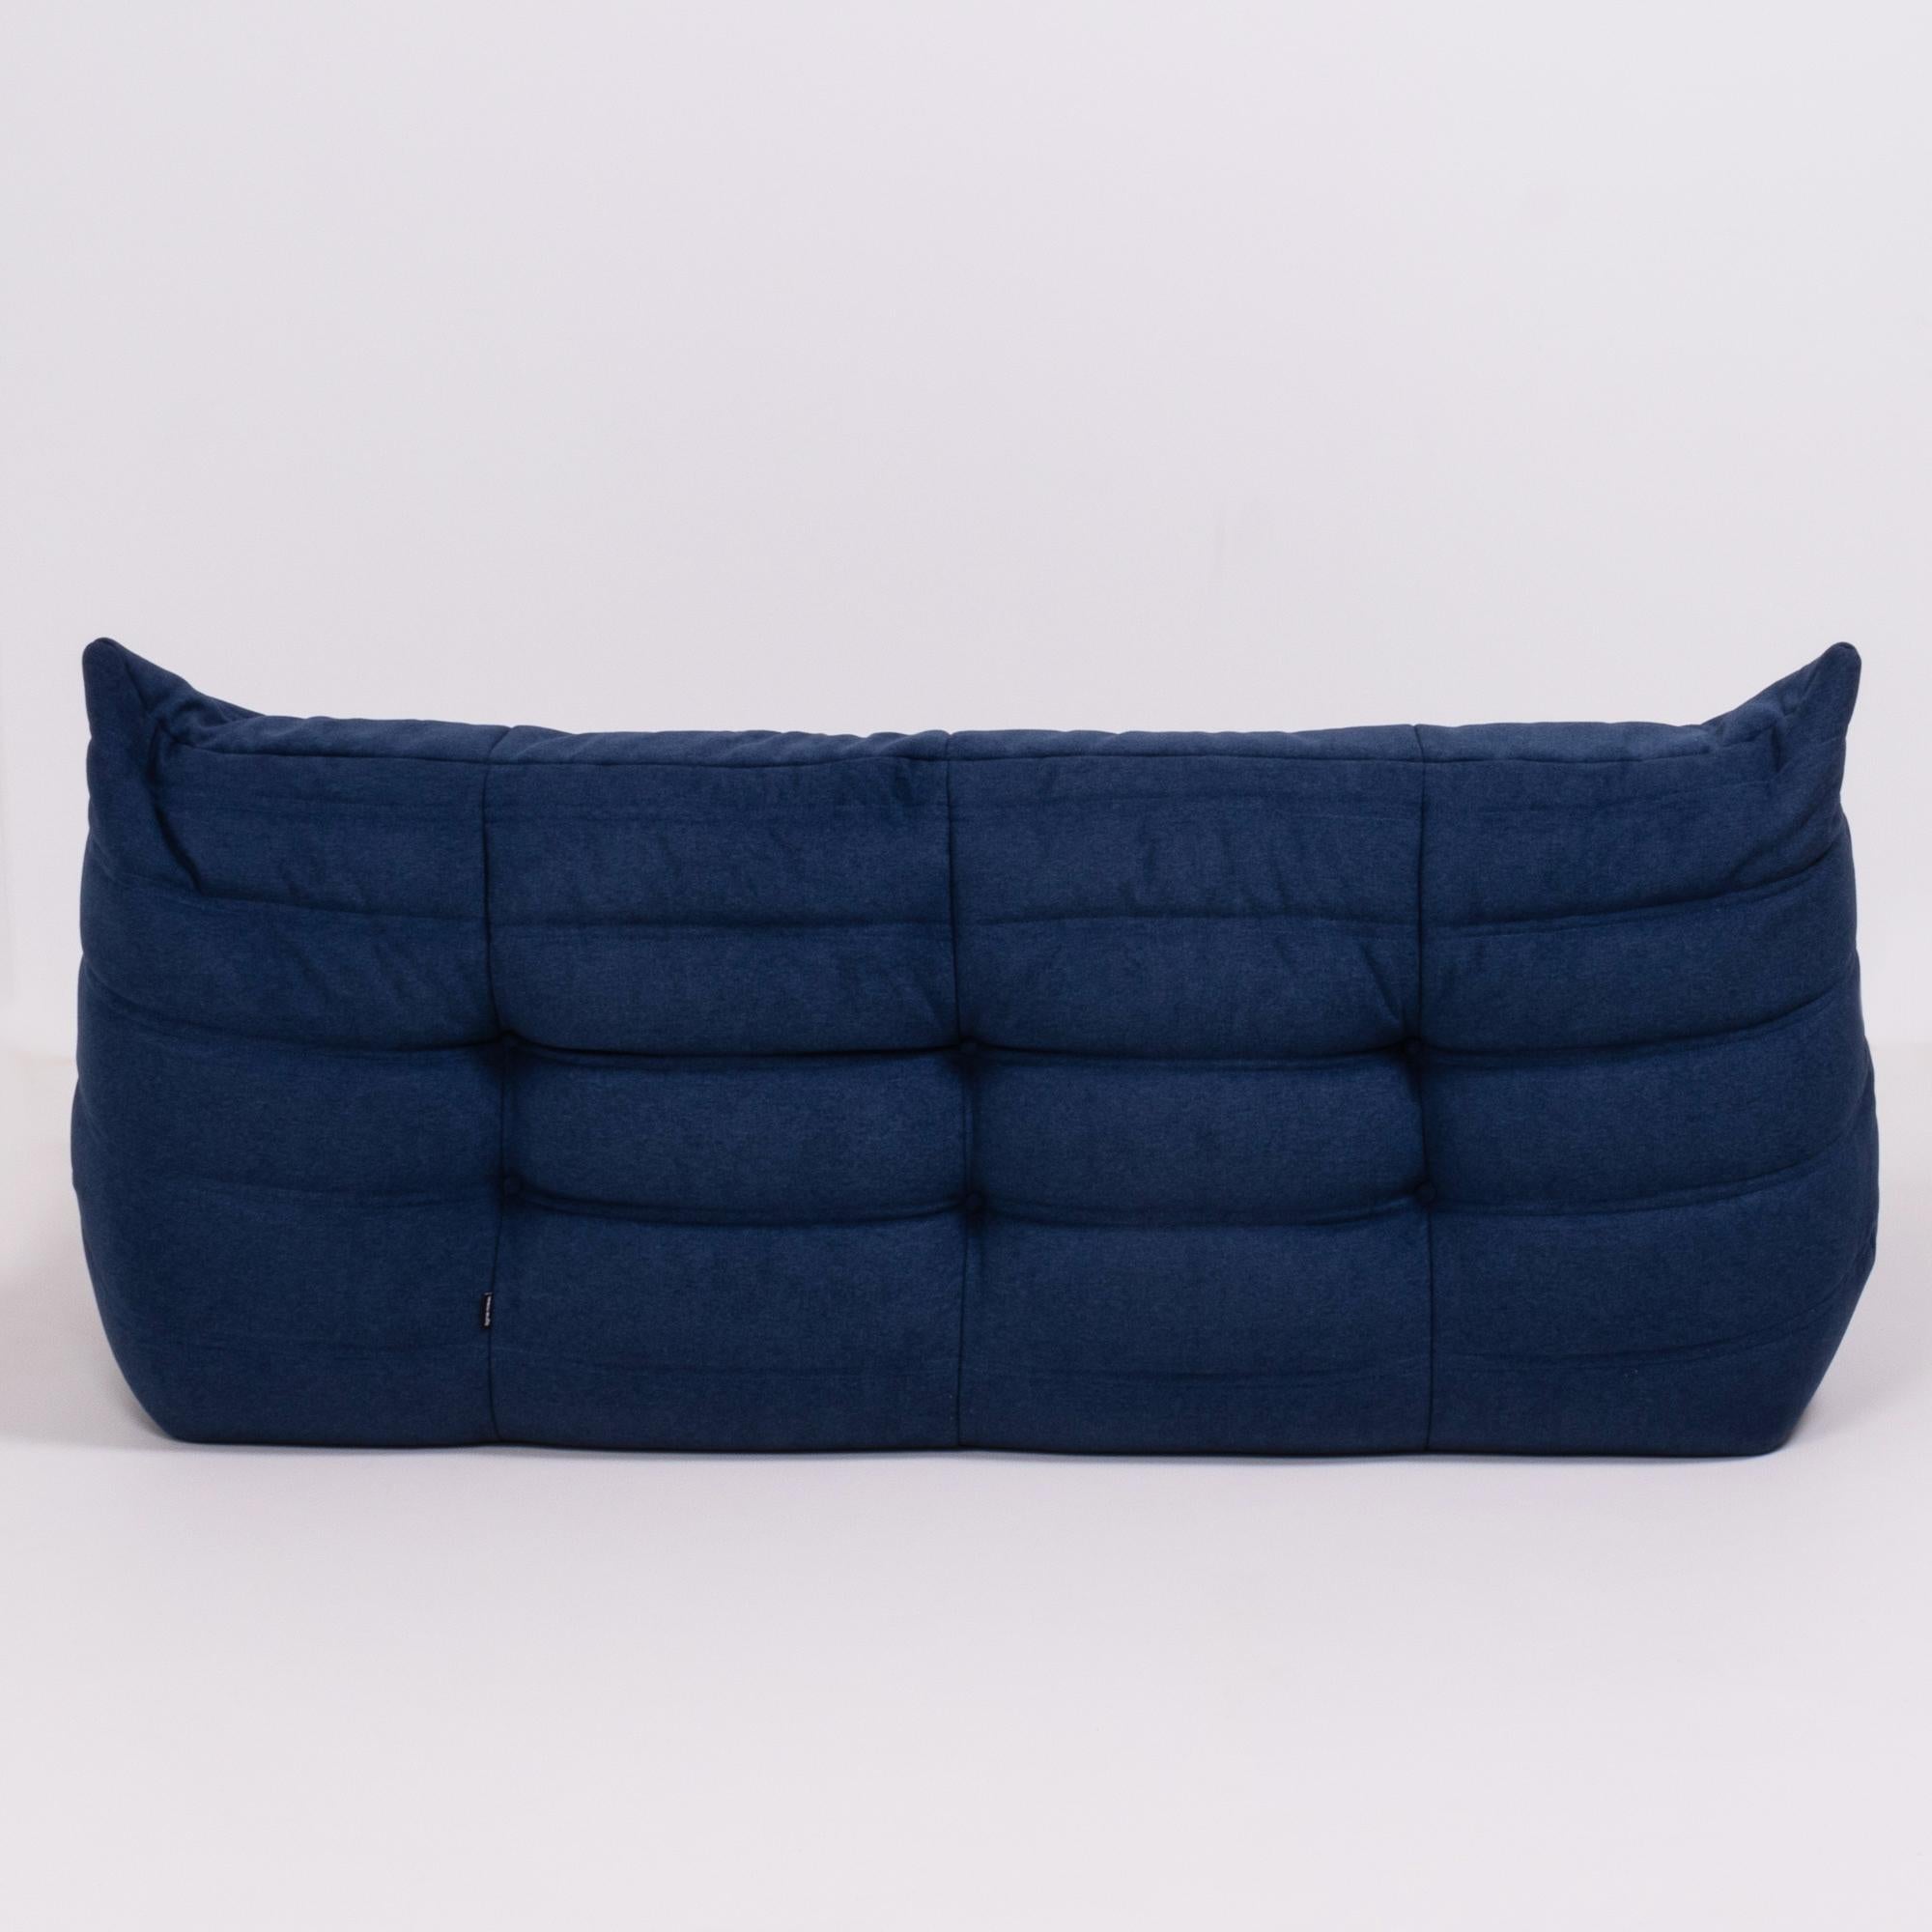 Late 20th Century Togo Blue Modular Sofa by Michel Ducaroy for Ligne Roset, Set of 3